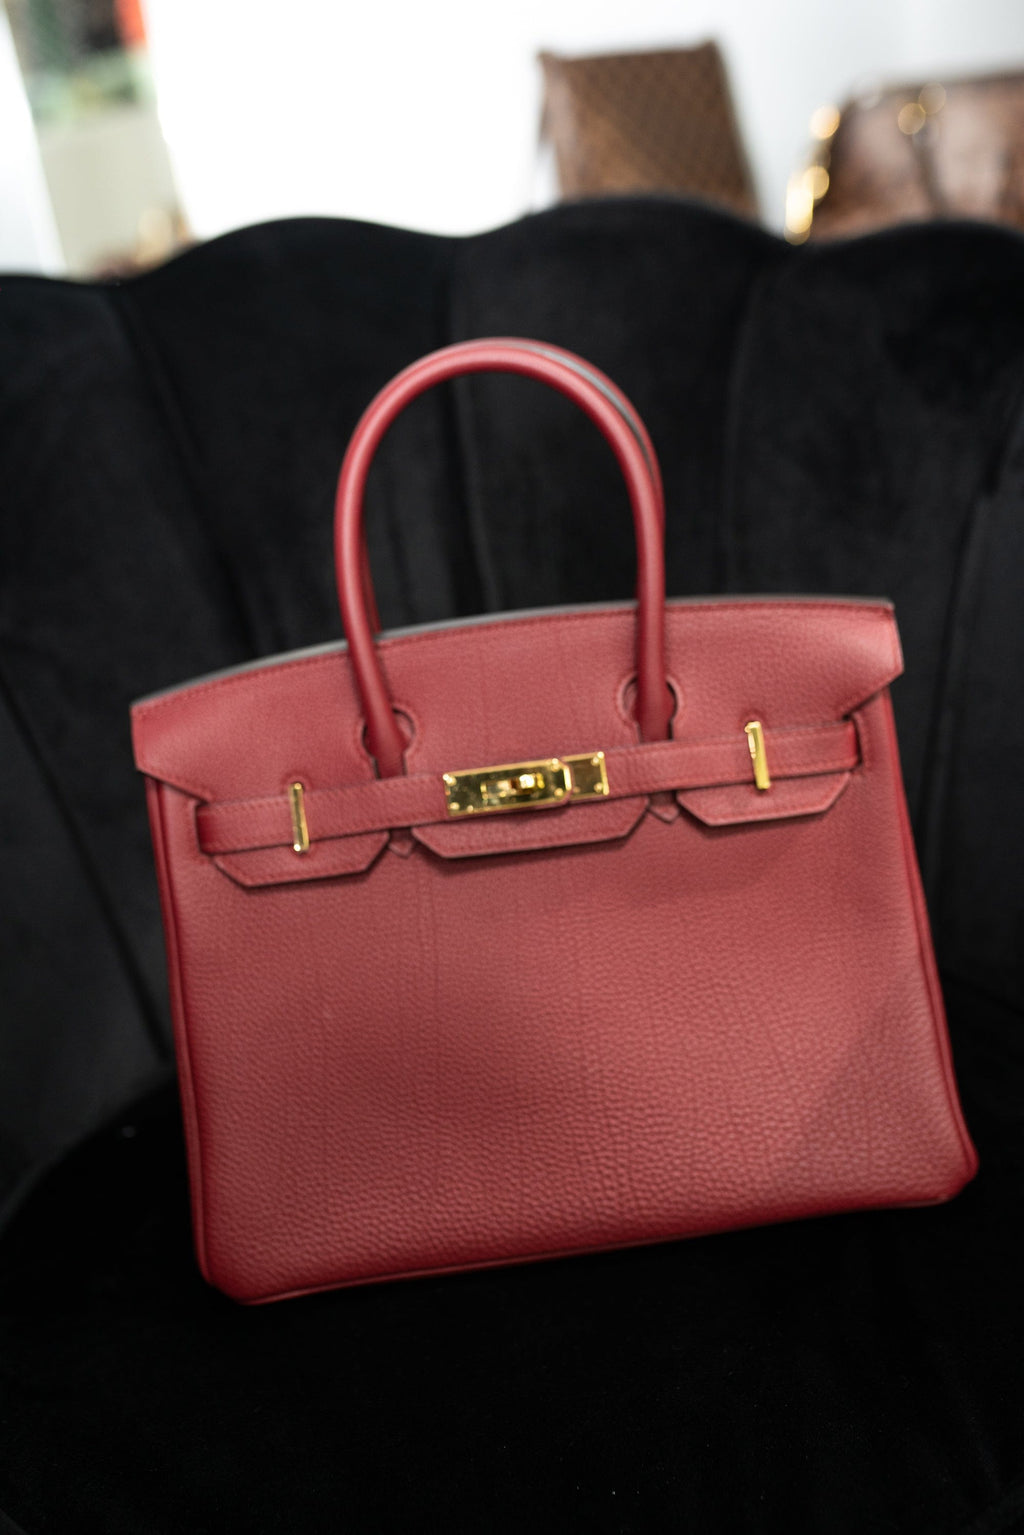 Hermès Birkin 25 Togo in Rouge Grenat. #hermes #hermesbirkin #handbagt